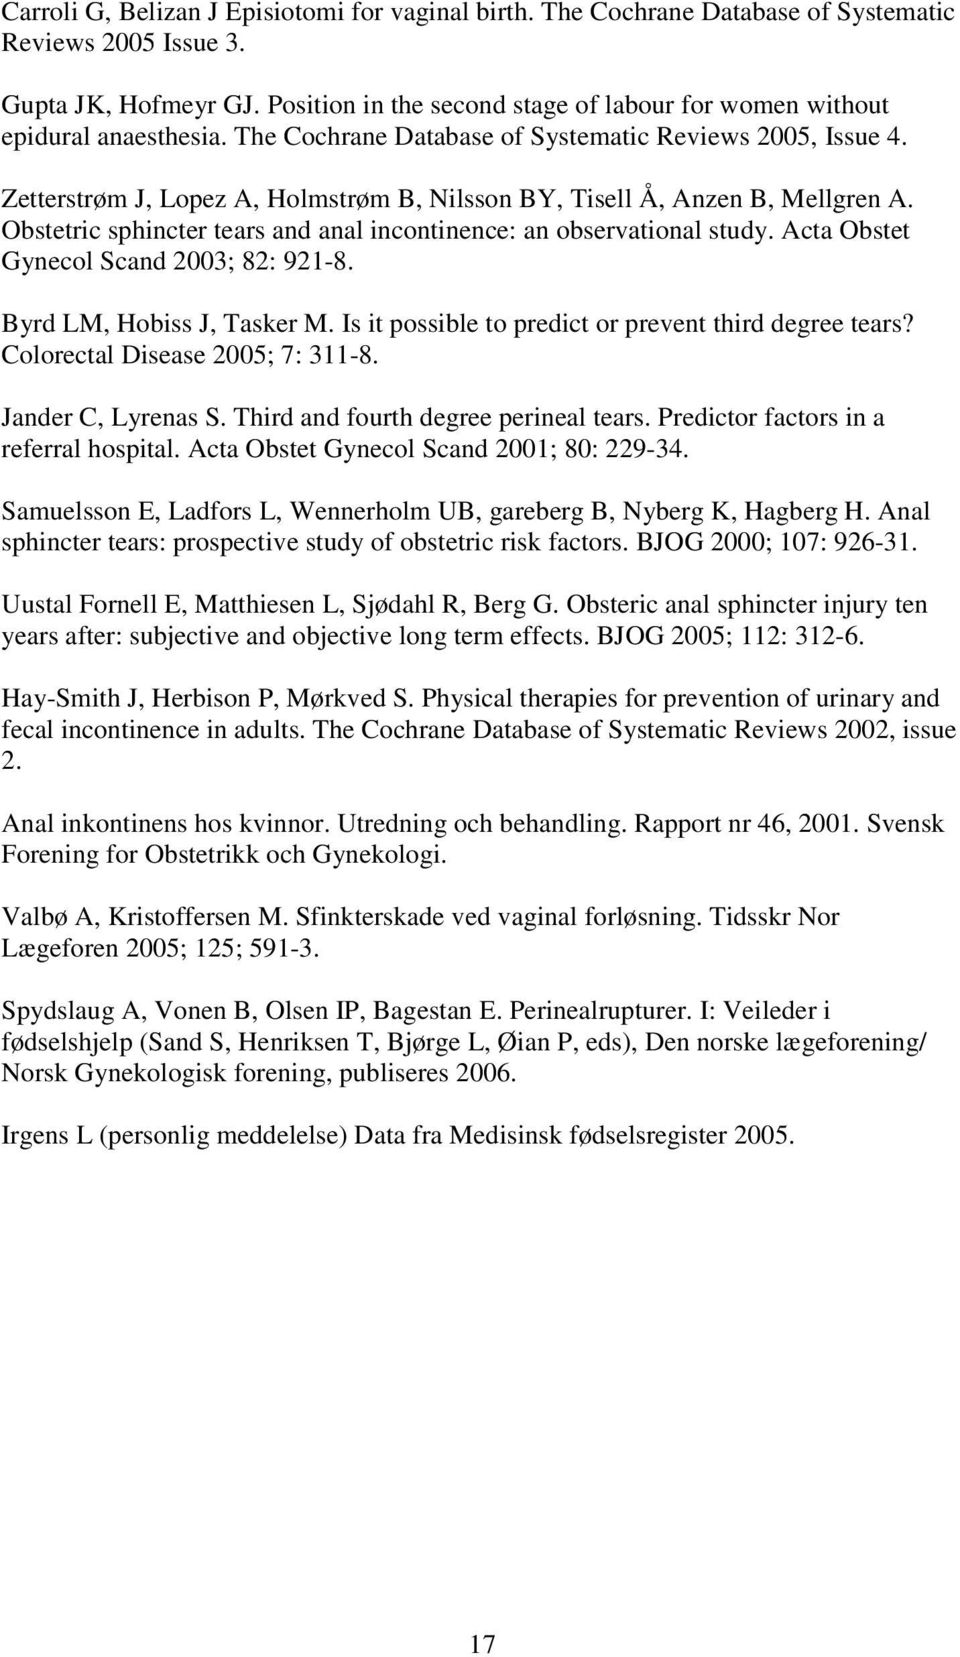 Zetterstrøm J, Lopez A, Holmstrøm B, Nilsson BY, Tisell Å, Anzen B, Mellgren A. Obstetric sphincter tears and anal incontinence: an observational study. Acta Obstet Gynecol Scand 2003; 82: 921-8.